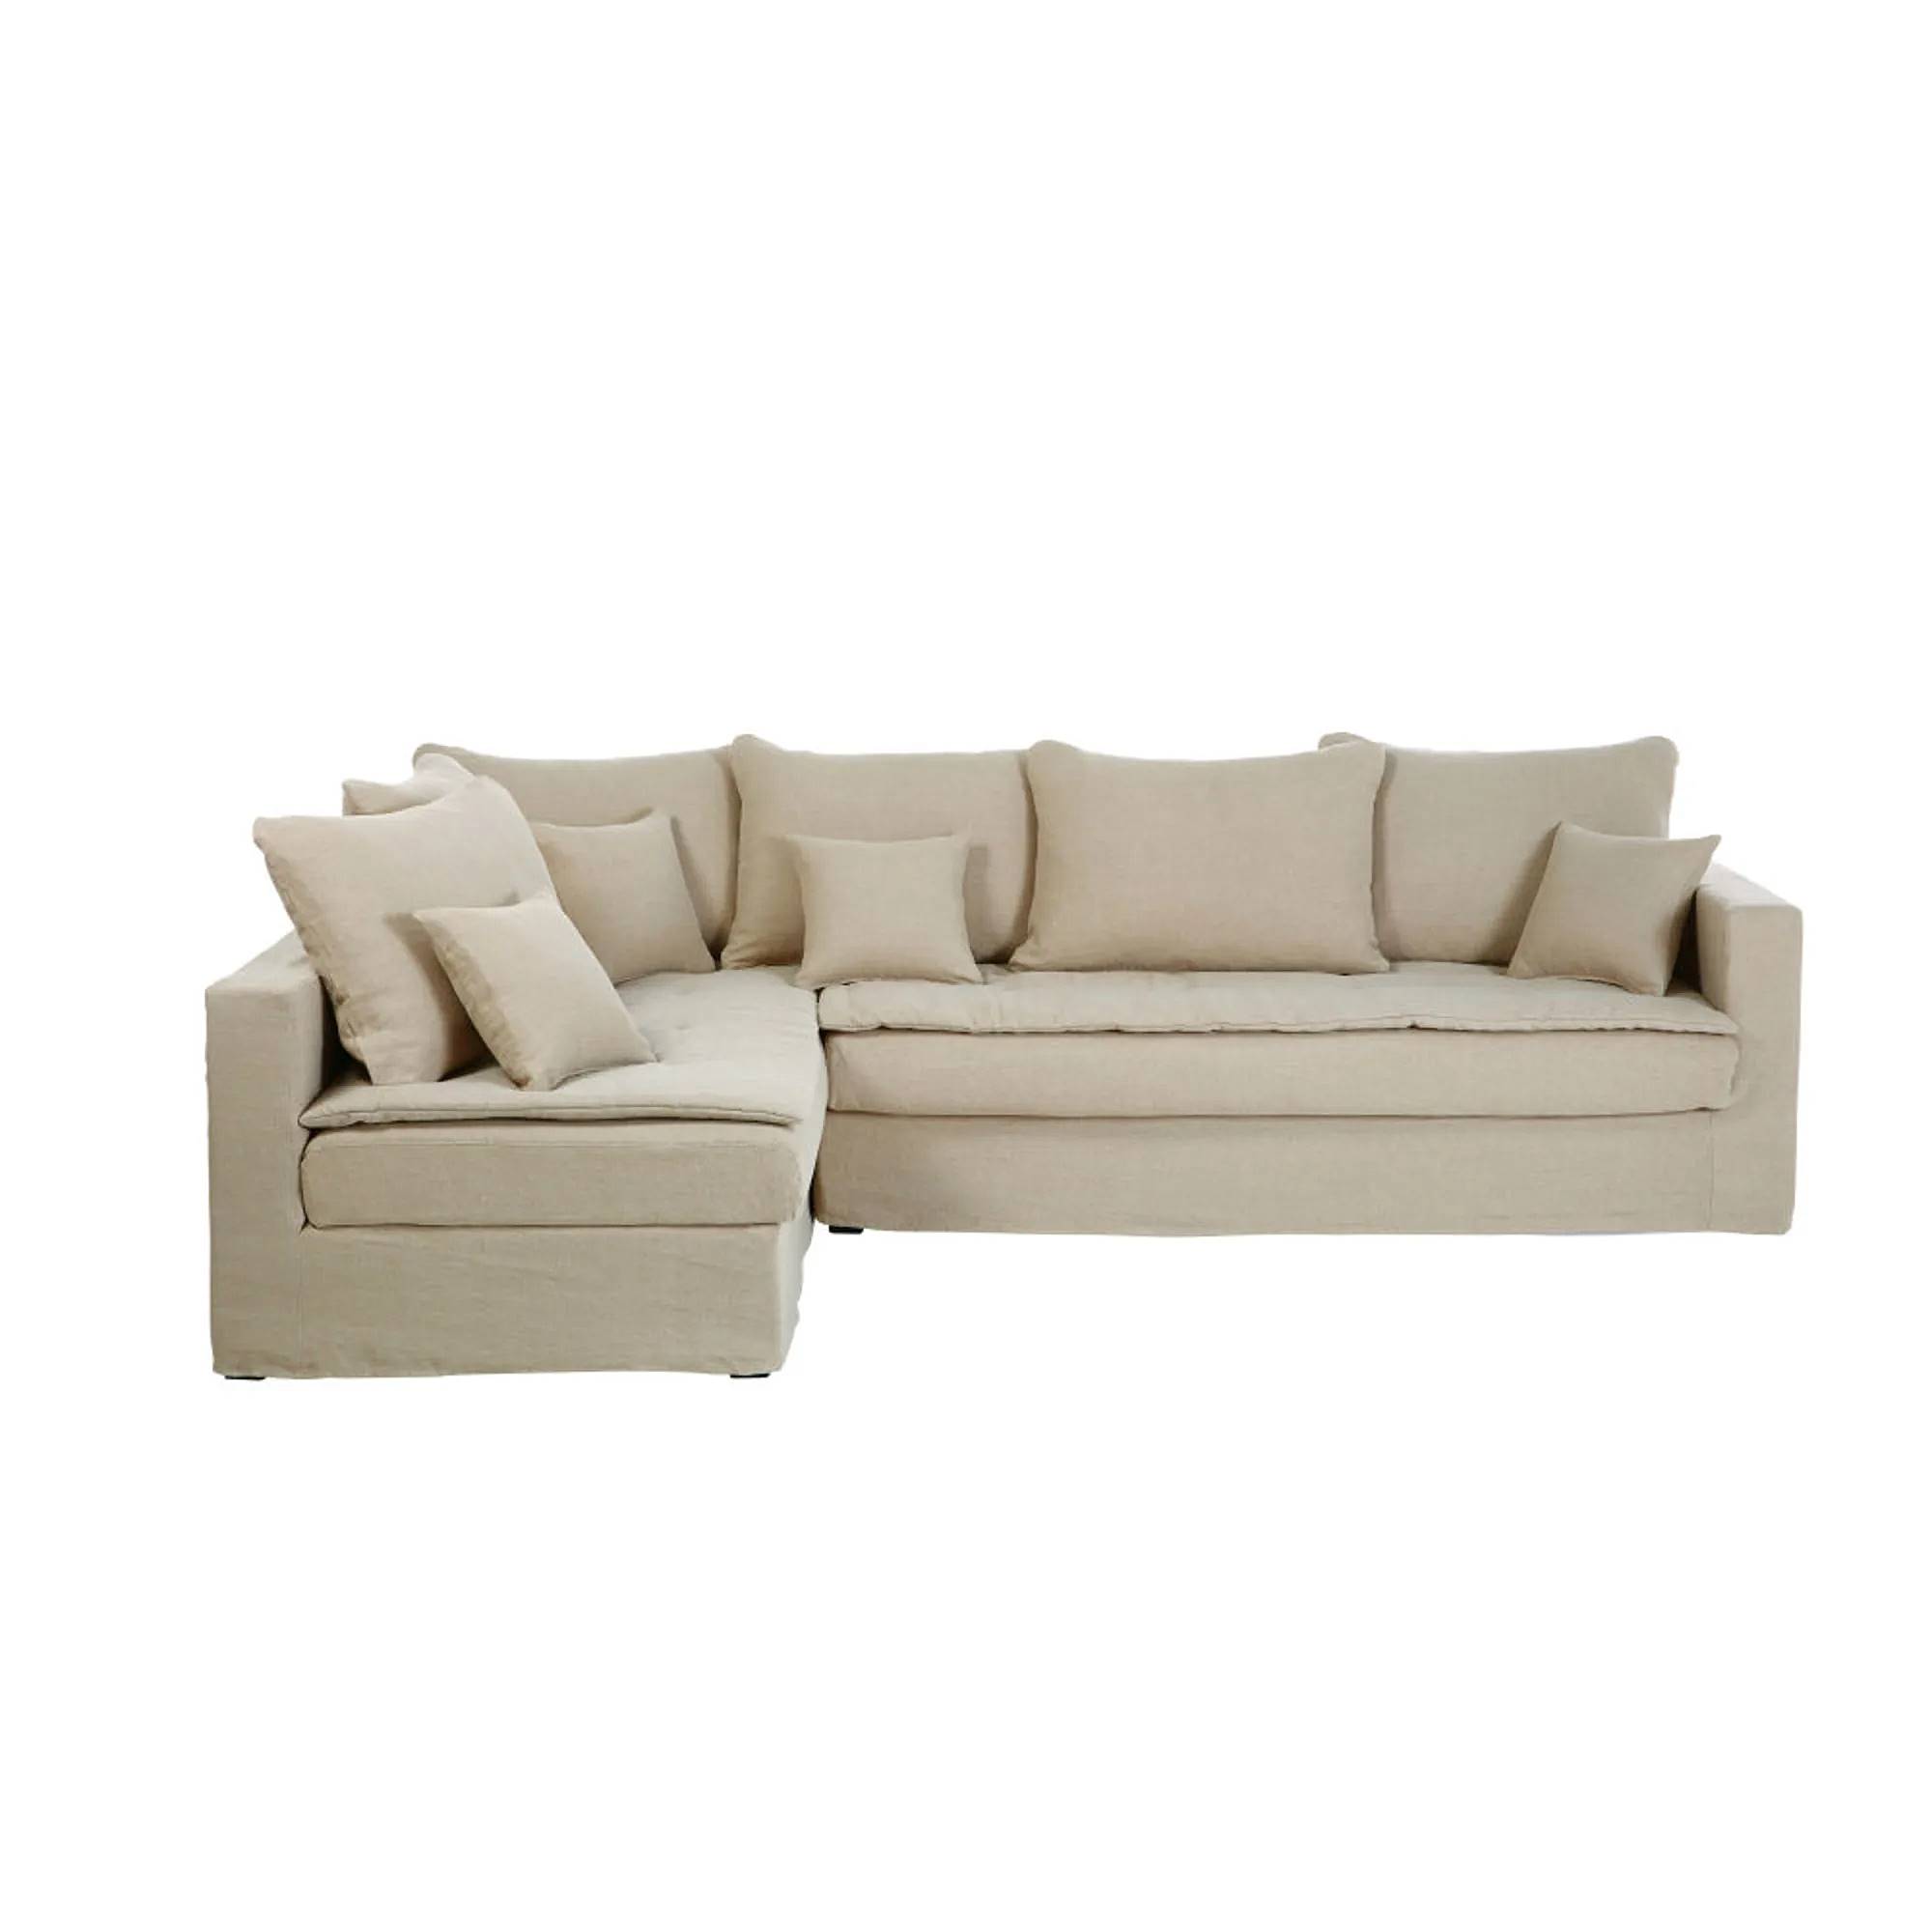 sofa-esquinero-izquierdo-de-5-plazas-de-lino-beige-1000-4-25-203426_1